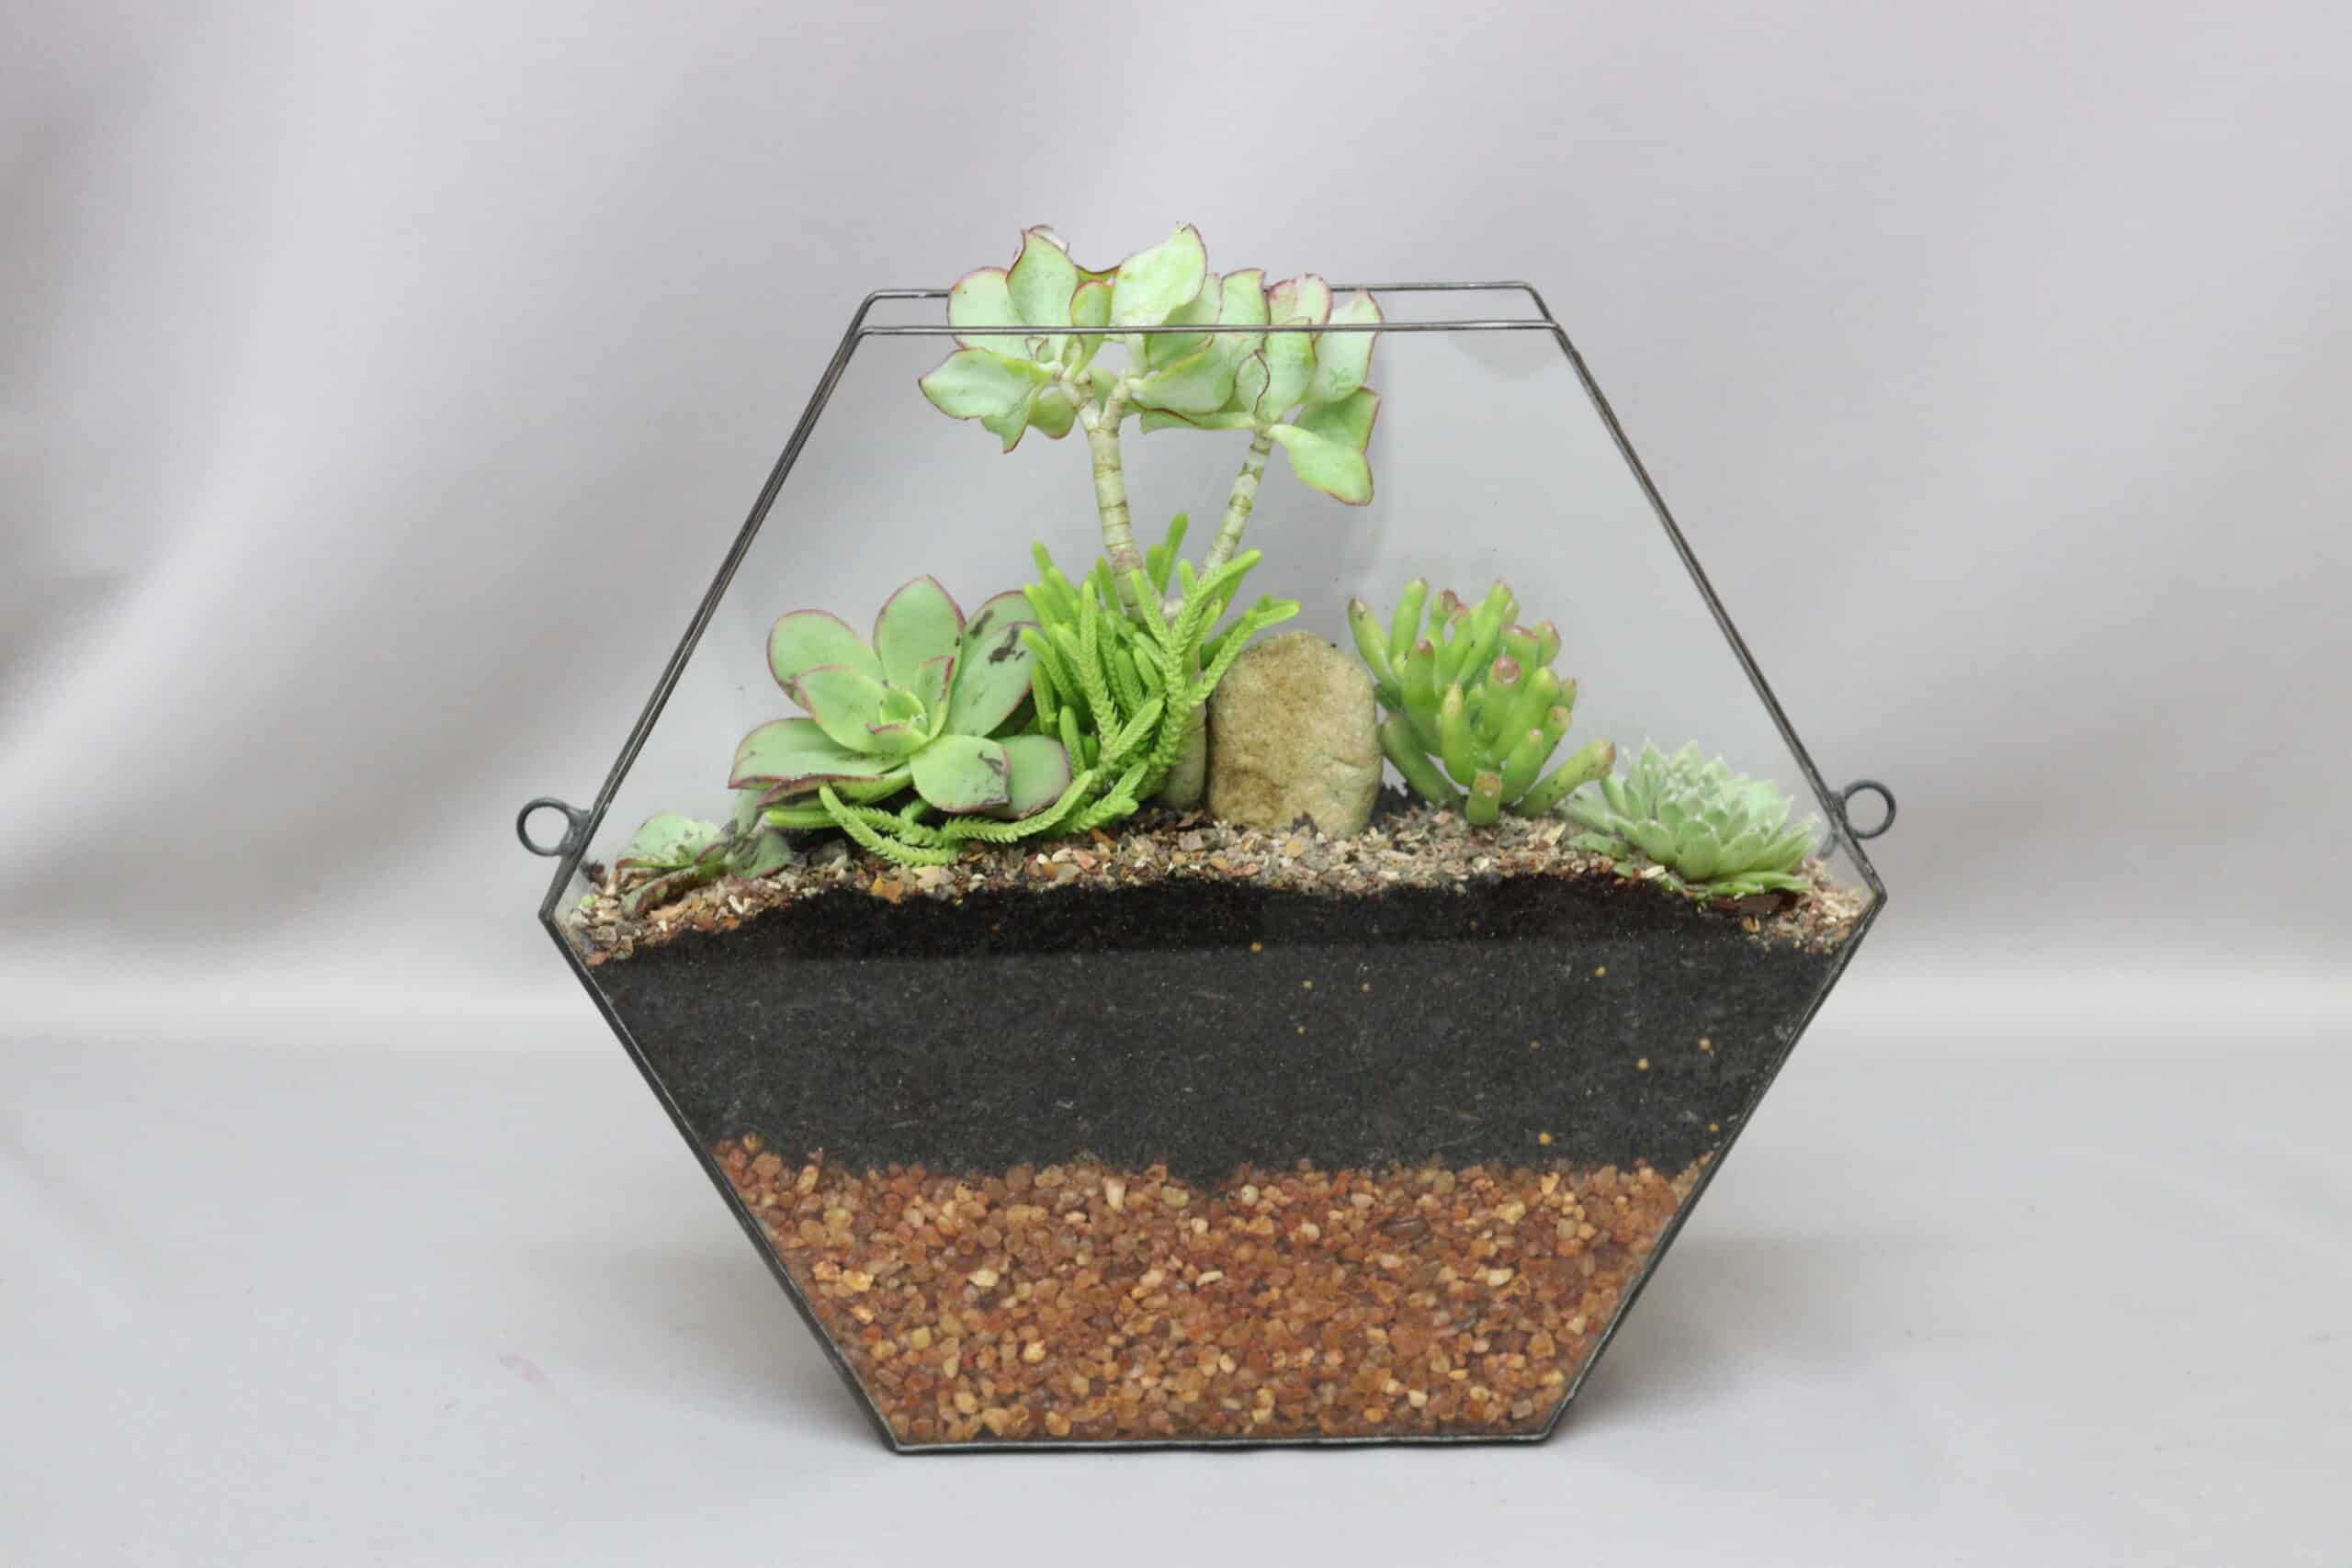 A hexagonal glass terrarium planter with an assortment of succulents inside, against a plain grey background.